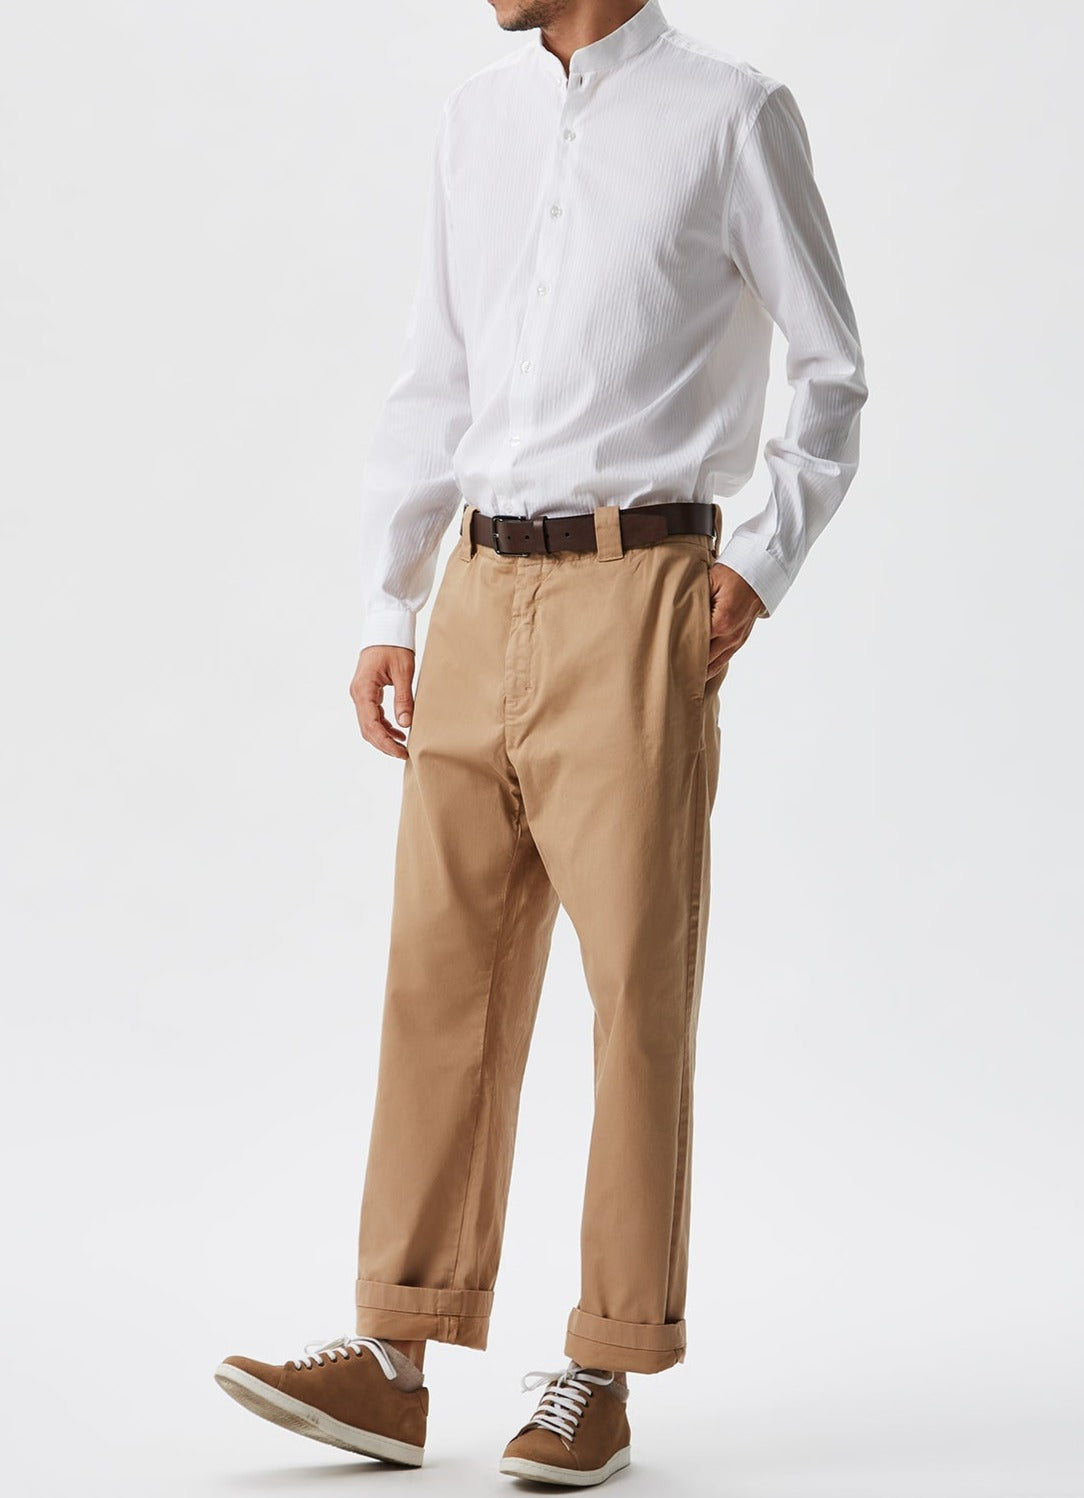 Men Shirt | White Jacquard Mandarin Collar Shirt by Spanish designer Adolfo Dominguez